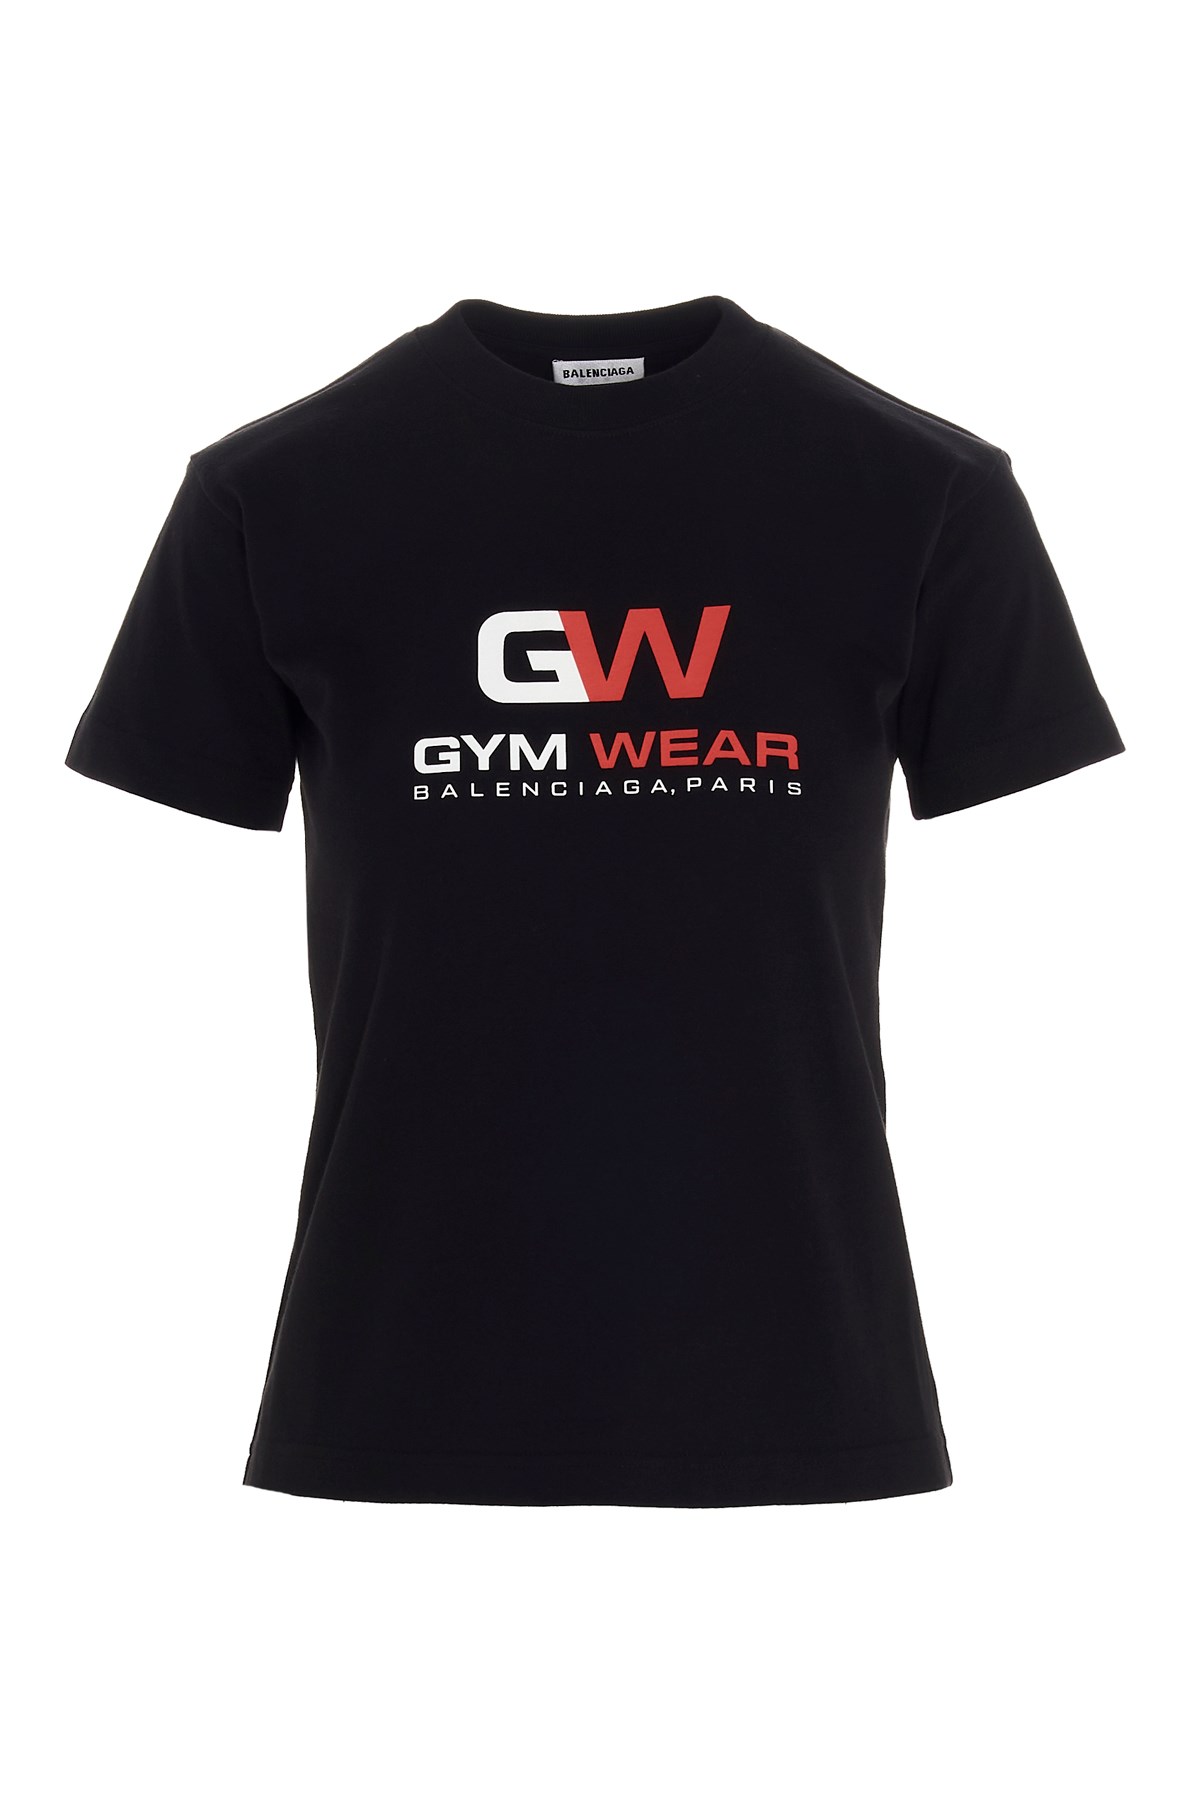 BALENCIAGA 'Gym Wear' T-Shirt